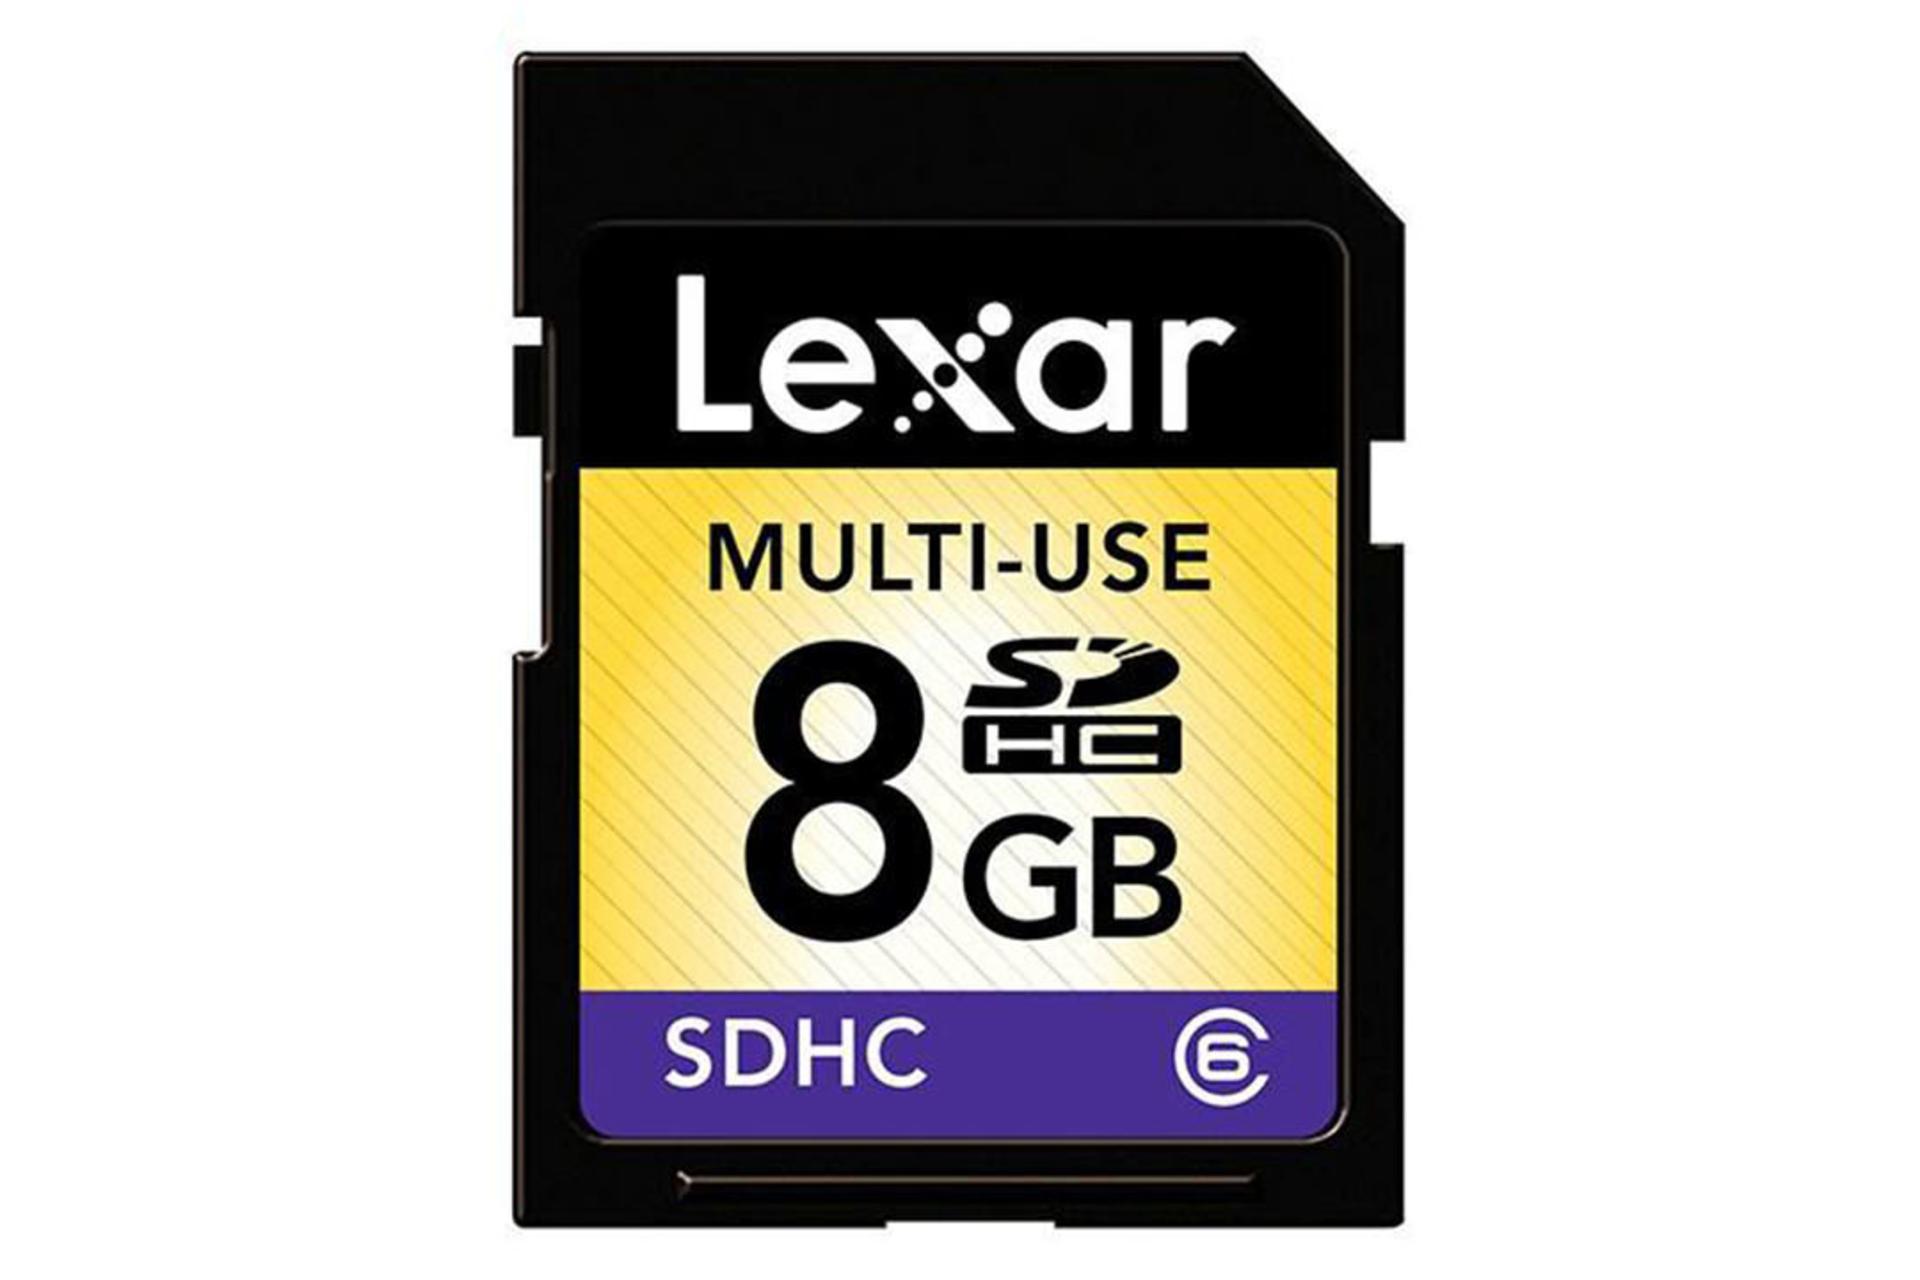 Lexar Multi Use SDHC Class 6 8GB